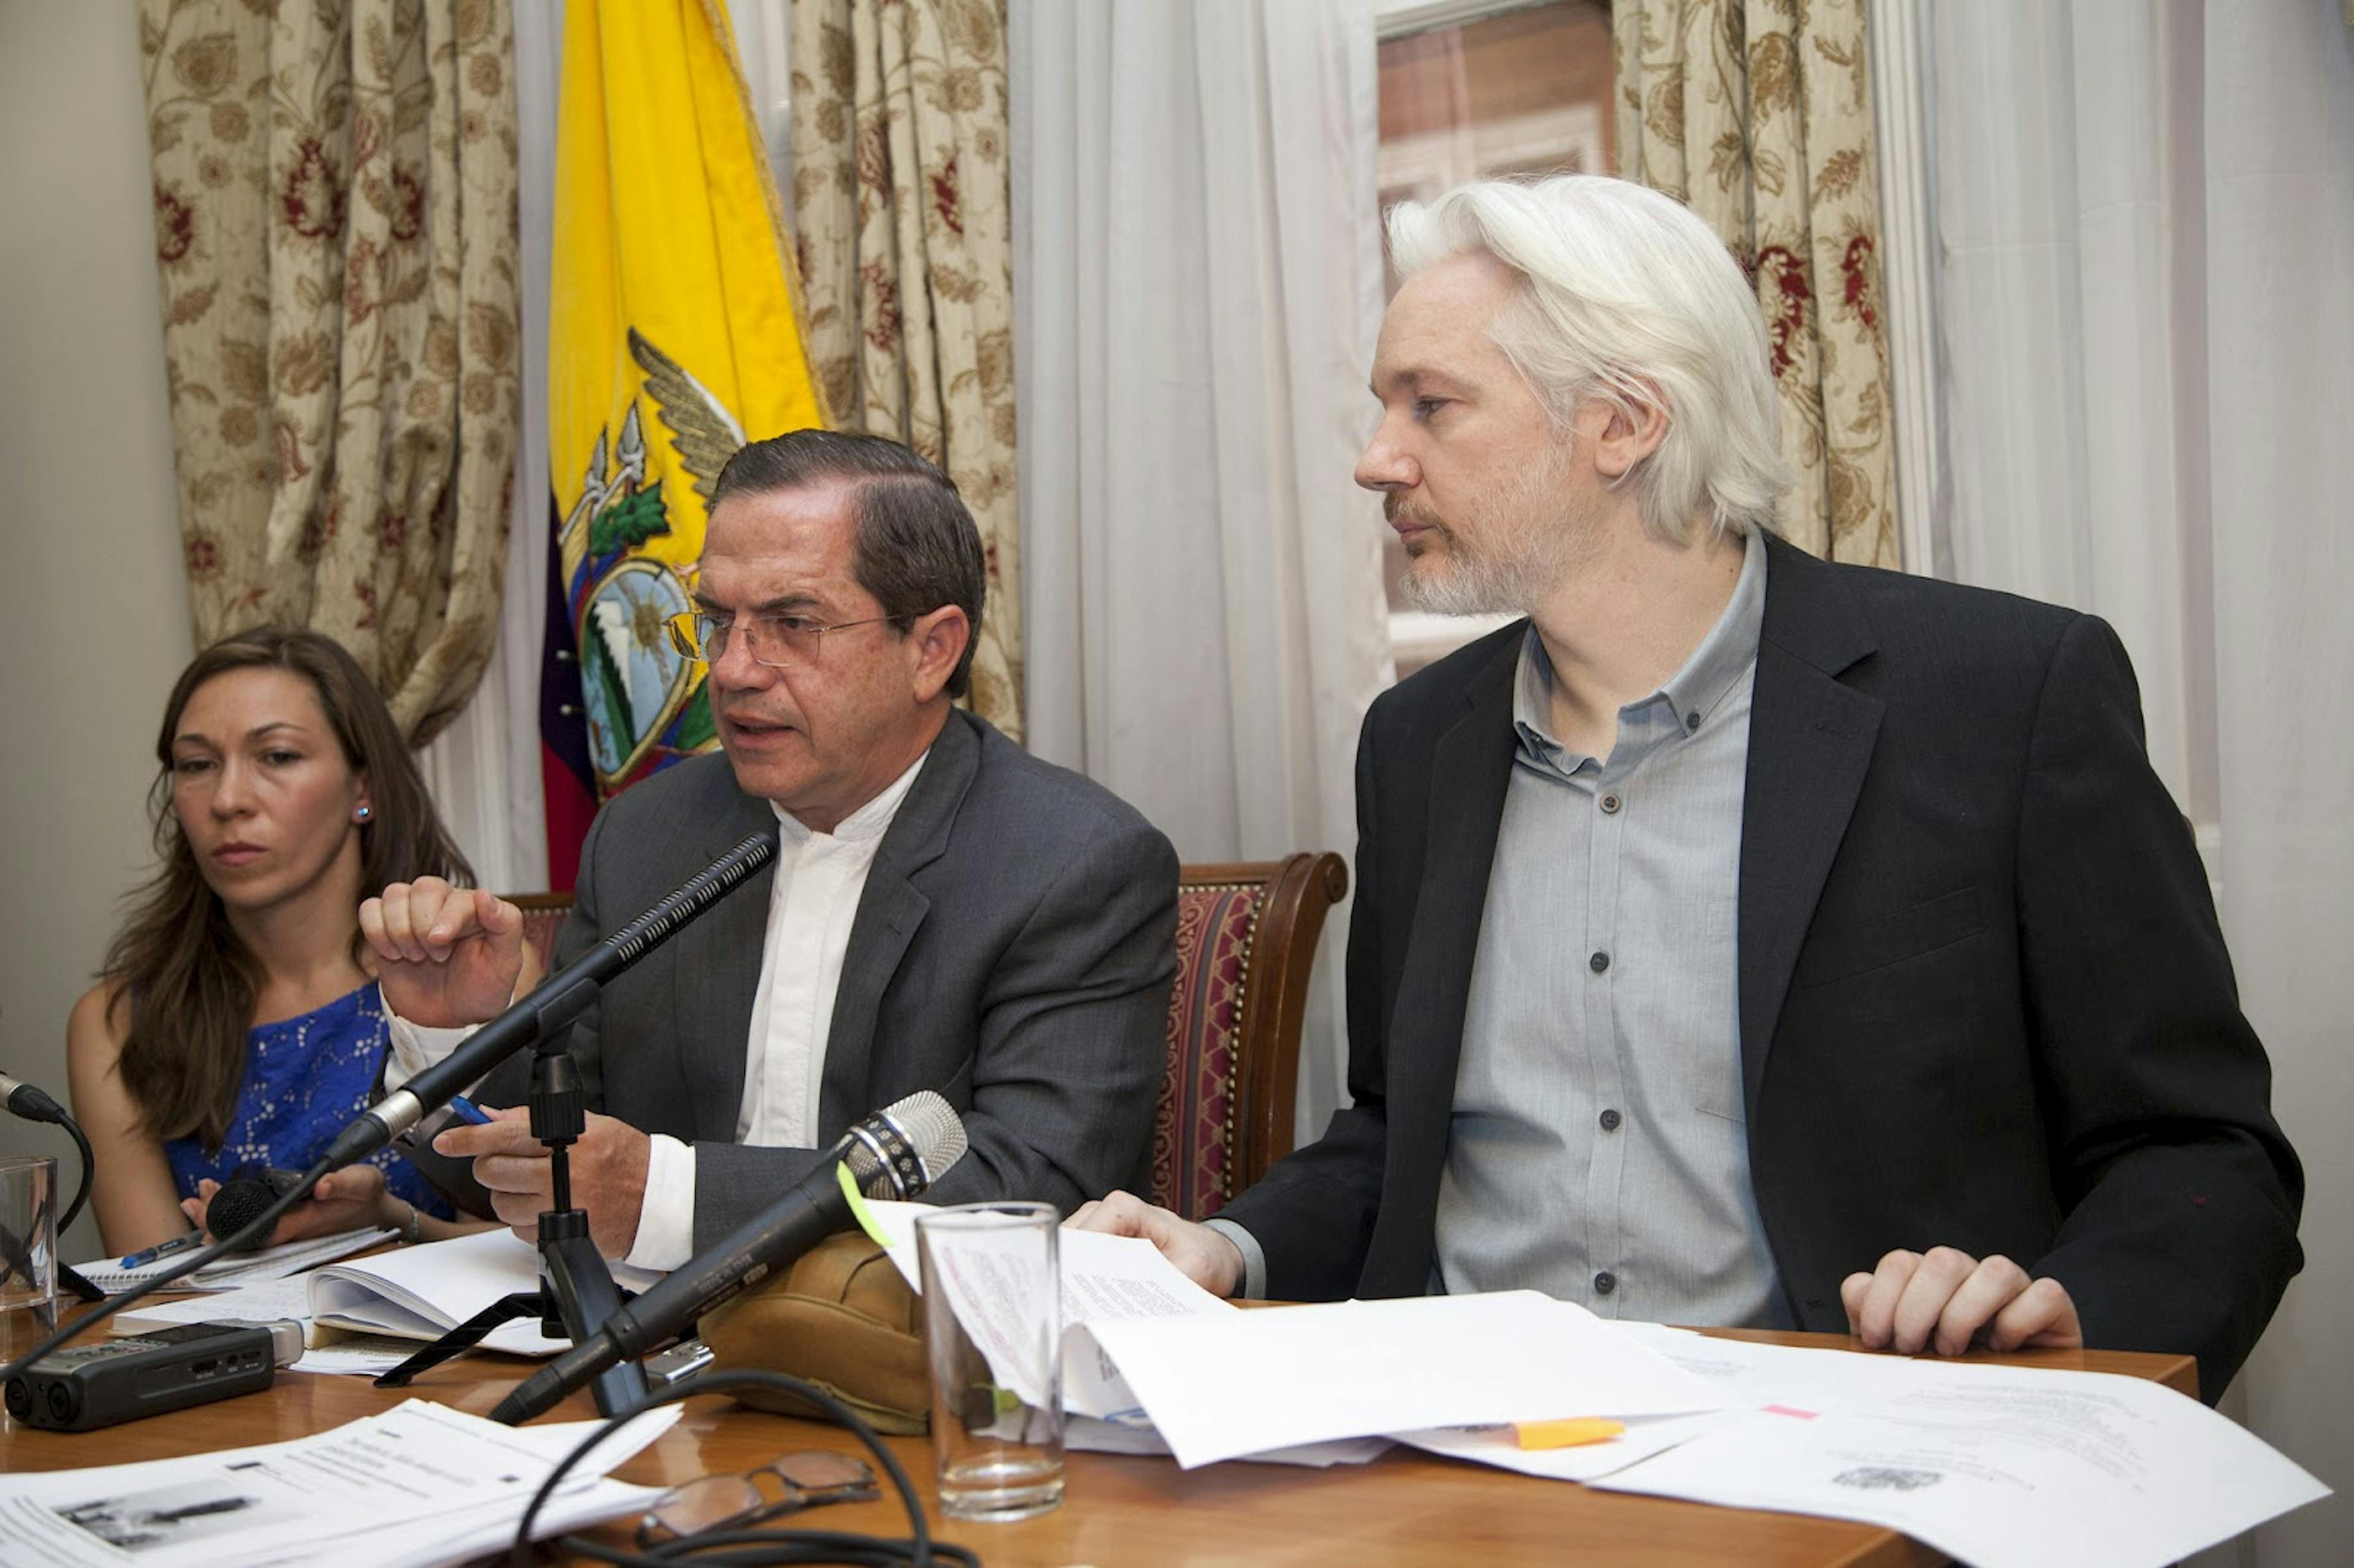 Assange during a press conference in the Ecuadorian Embassy in the UK (2014). Image by Cancillería de Ecuador / Flickr.